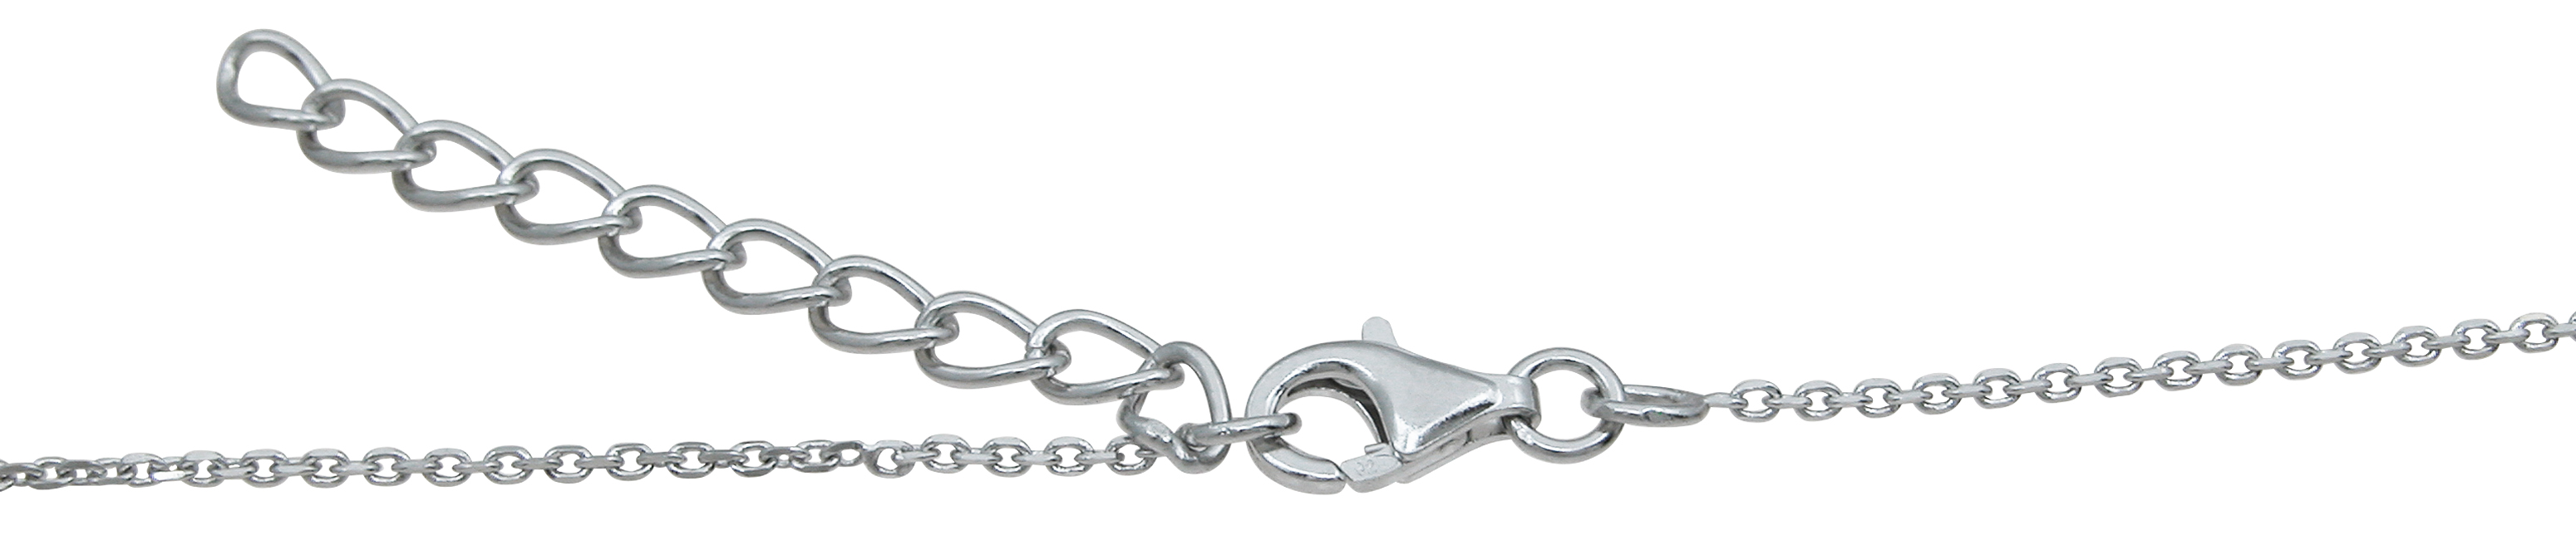 wholesale sterling silver lock pendant